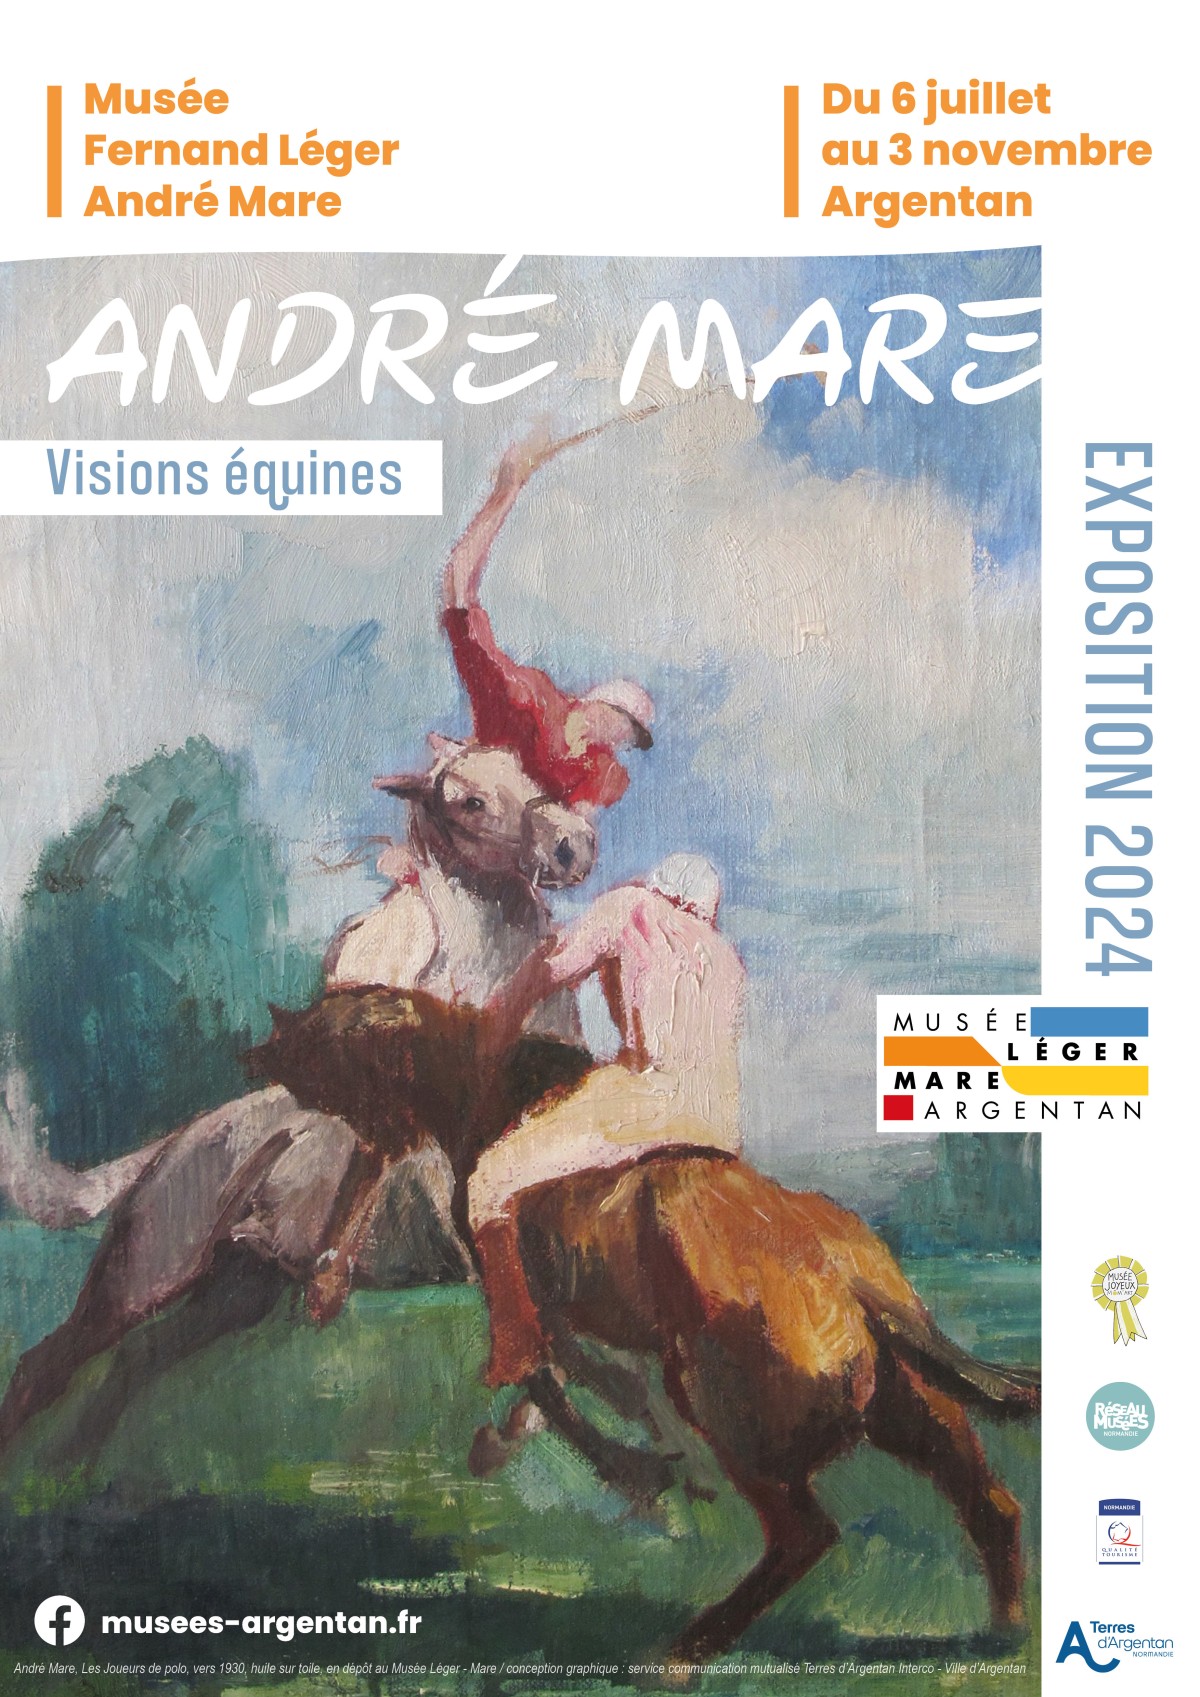 Exposition temporaire - ANDRE MARE VISIONS EQUINES | Mairie d'Argentan - Musée Fernand Léger - André Mare